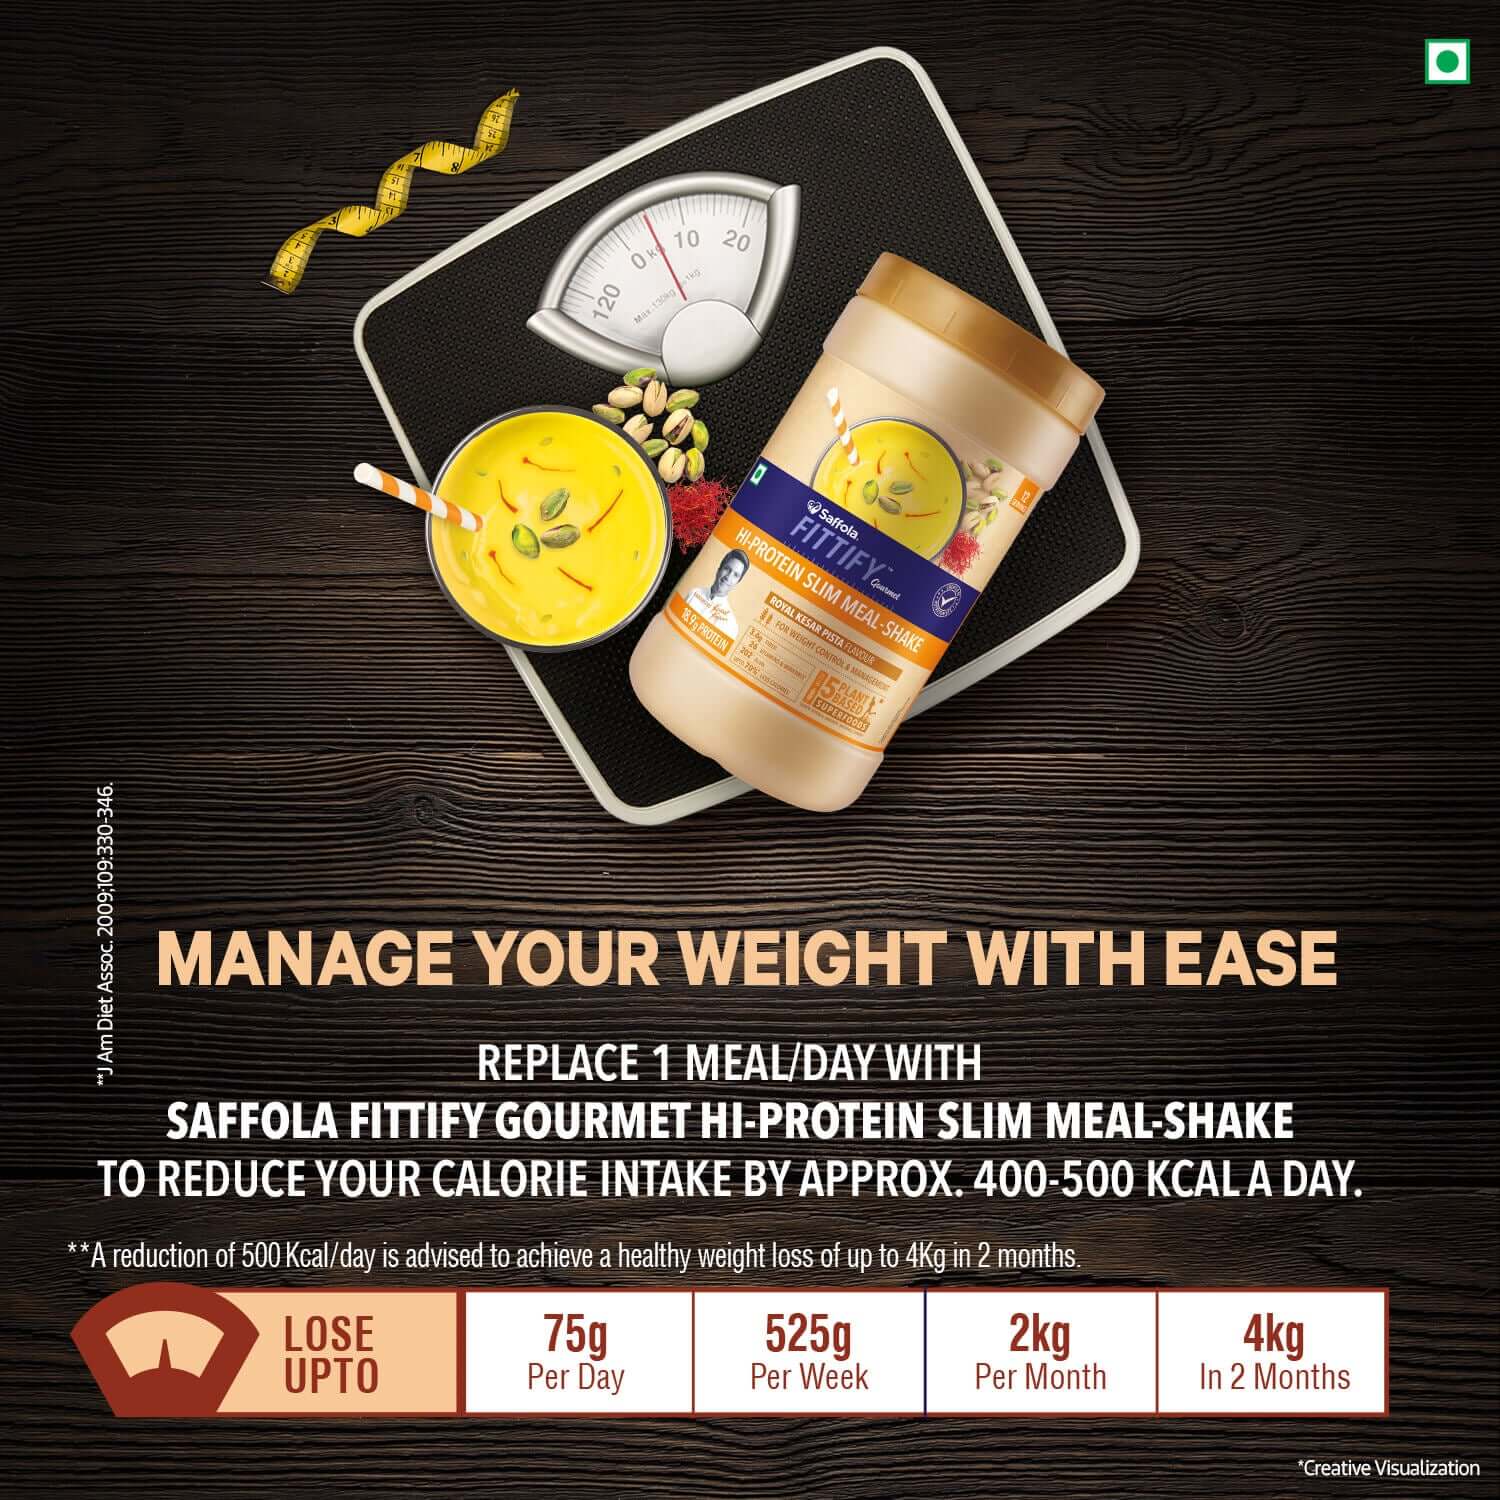 Saffola Fittify Hi-Protein Slim Meal Shake - Royal Kesar Pista - Pack of 1 - 420g